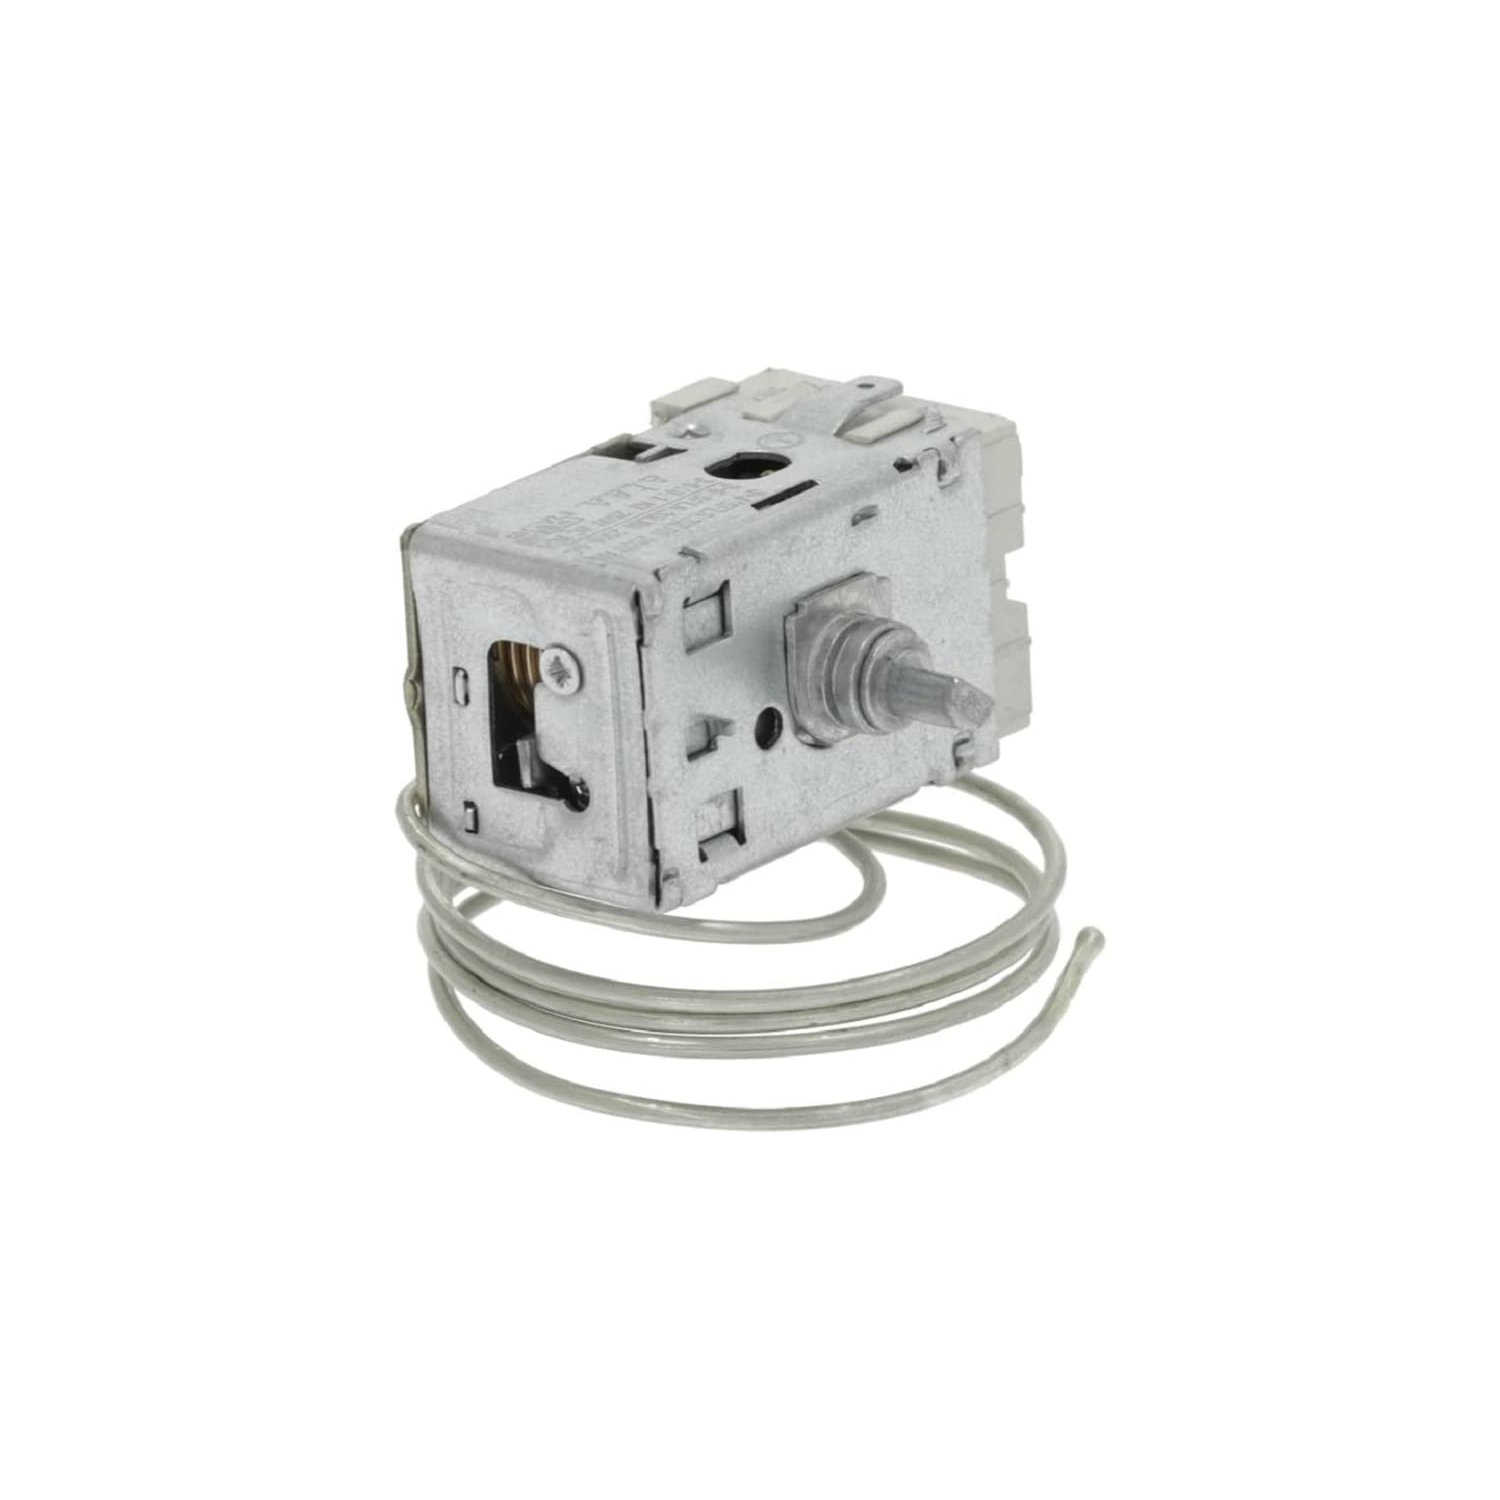 Thermostat Atea A13-0696R for refrigerator, min 4,5 ° C, max -33 ° C, L 650 mm, 4,8mm AMP